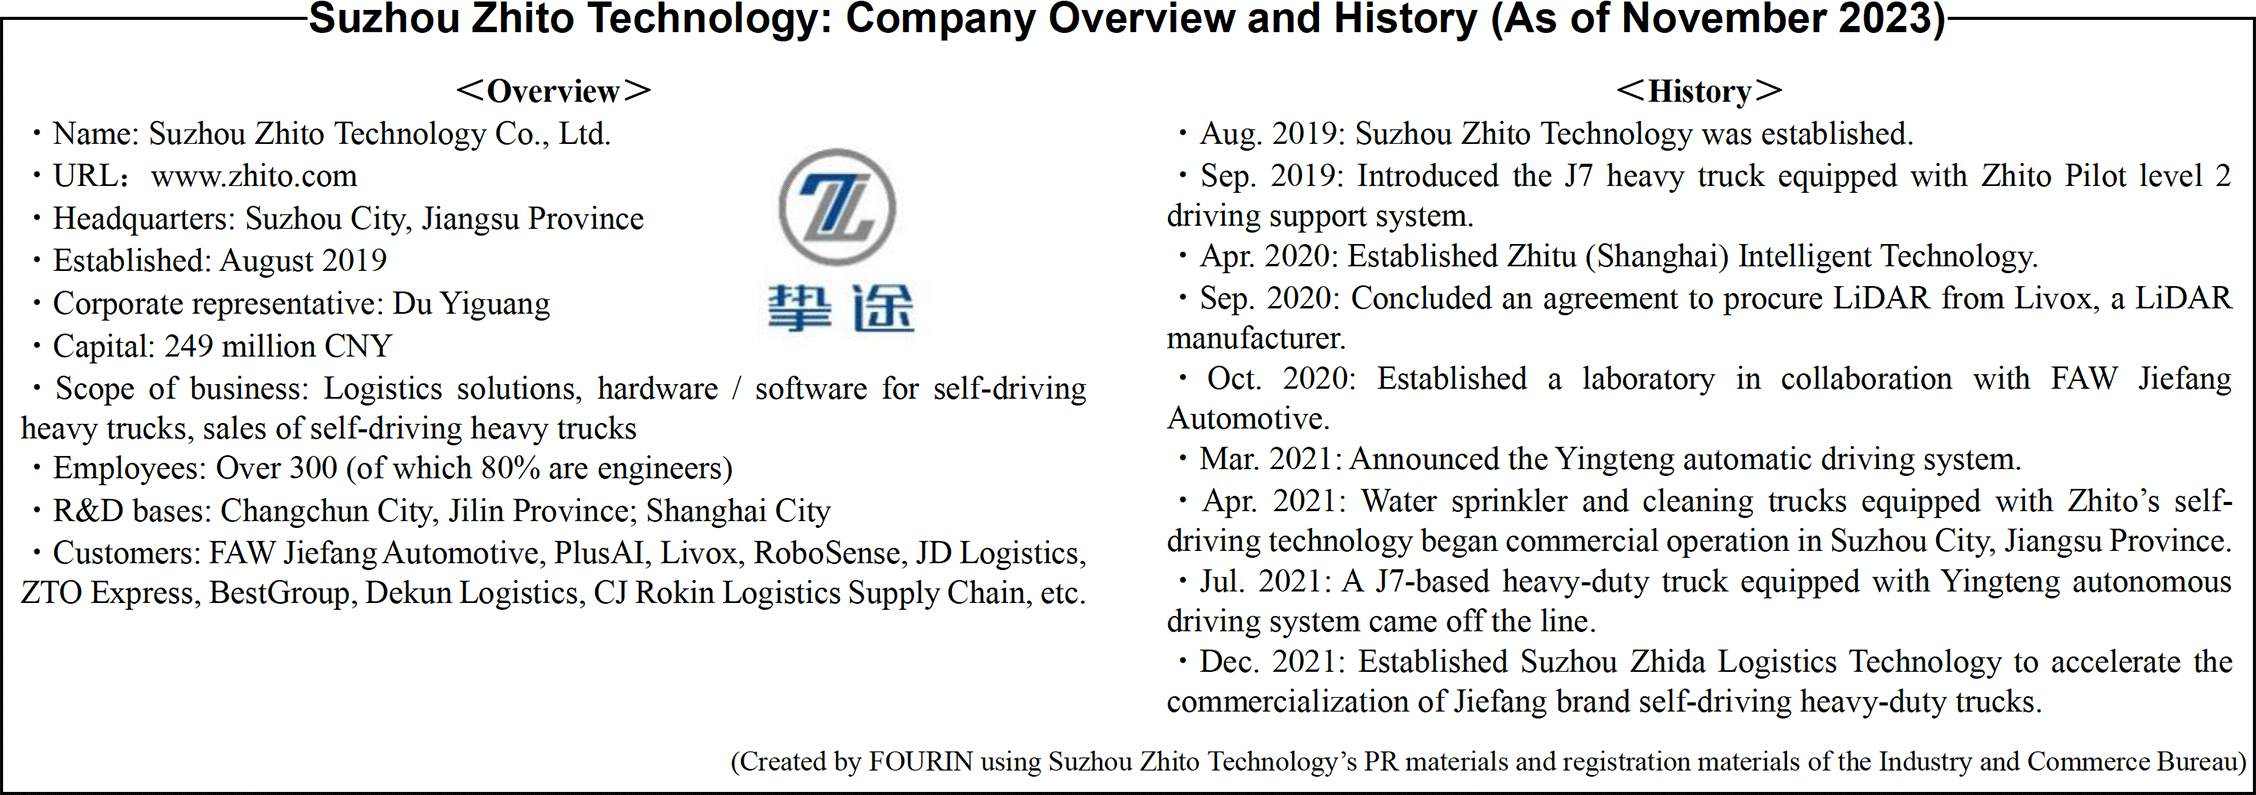 Data: Suzhou Zhito Technology: Company Overview and History (As of November 2023)